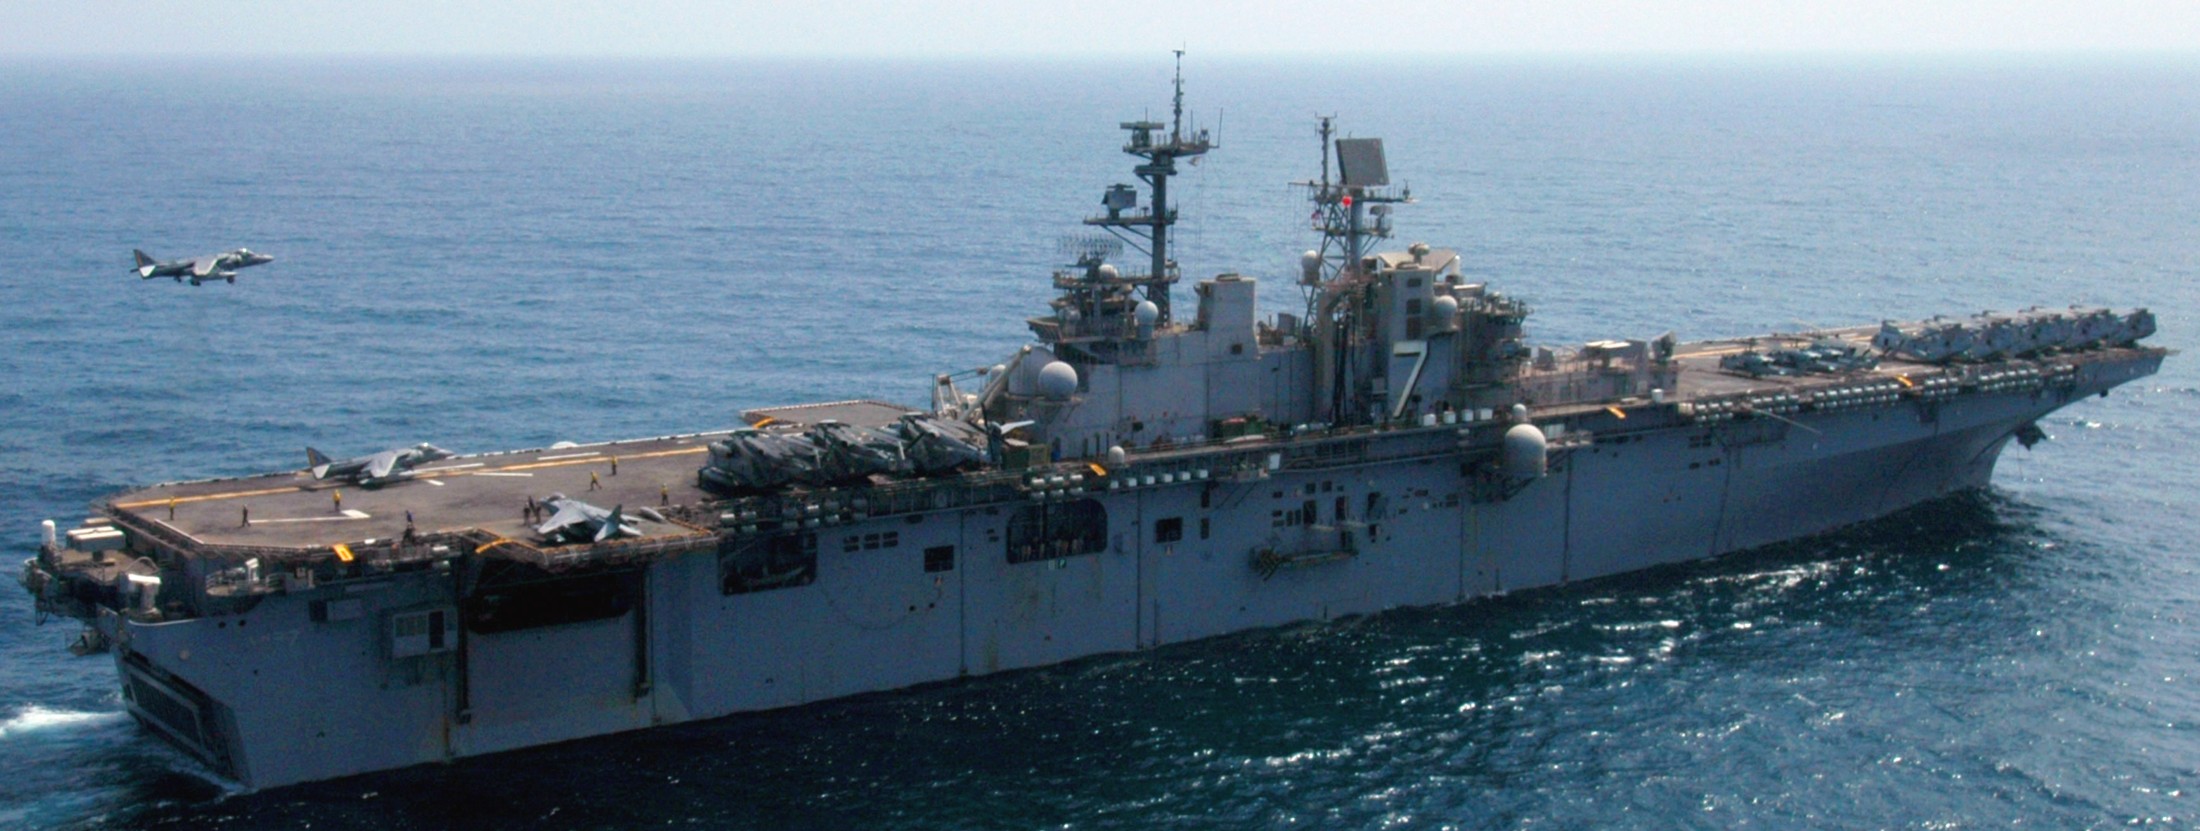 lhd-7 uss iwo jima wasp class amphibious assault ship dock landing helicopter us navy hmm-365 marines arabian sea 2006 29